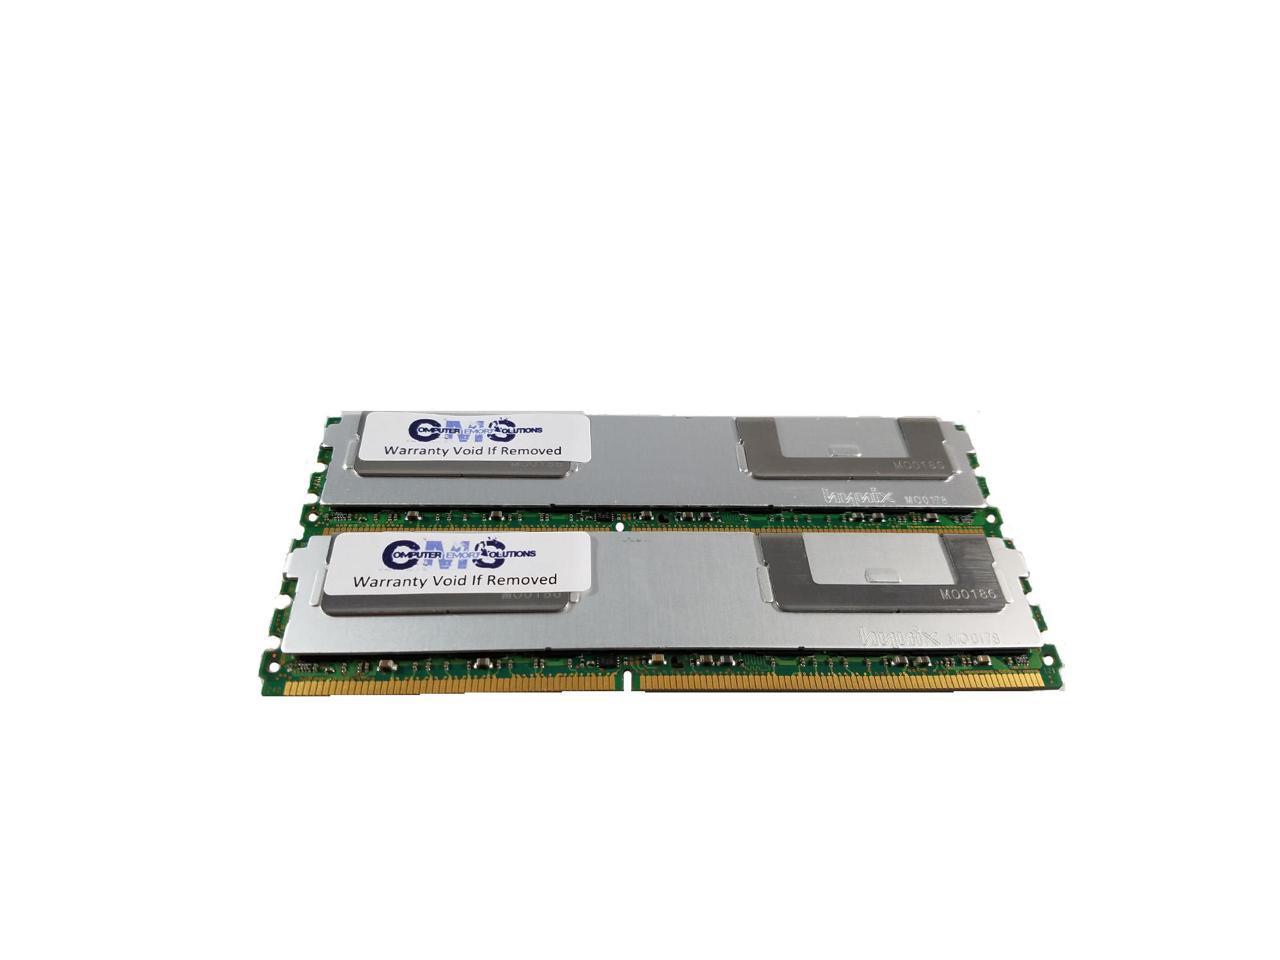 16GB Mem RAM 4 HP/Compaq BL460c Server Blade PC5300 Fully Buffered B104 4x4GB 